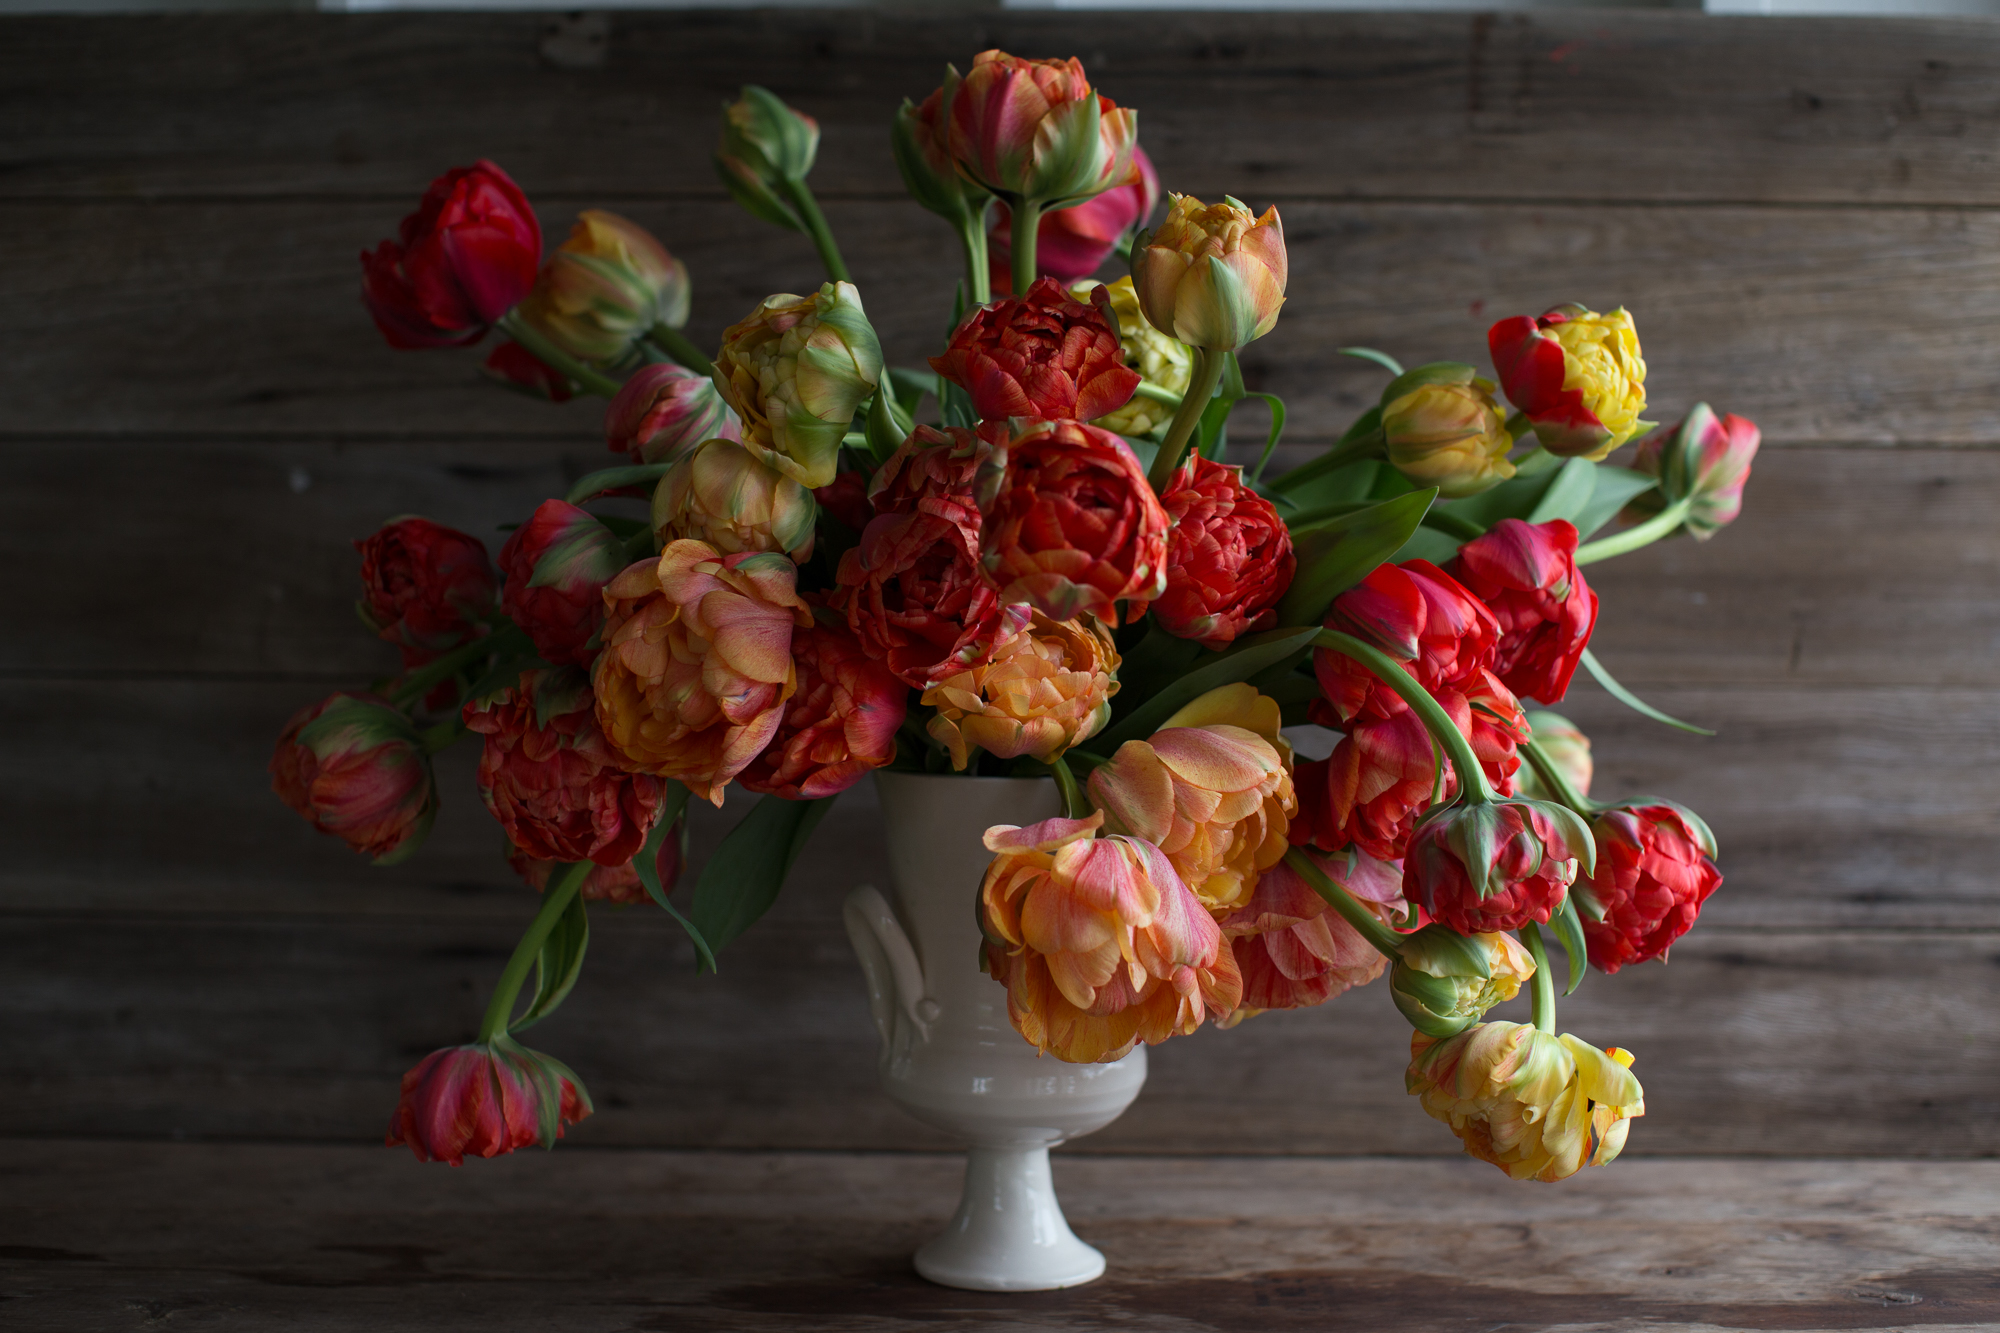 Tulips in a ceramic vase